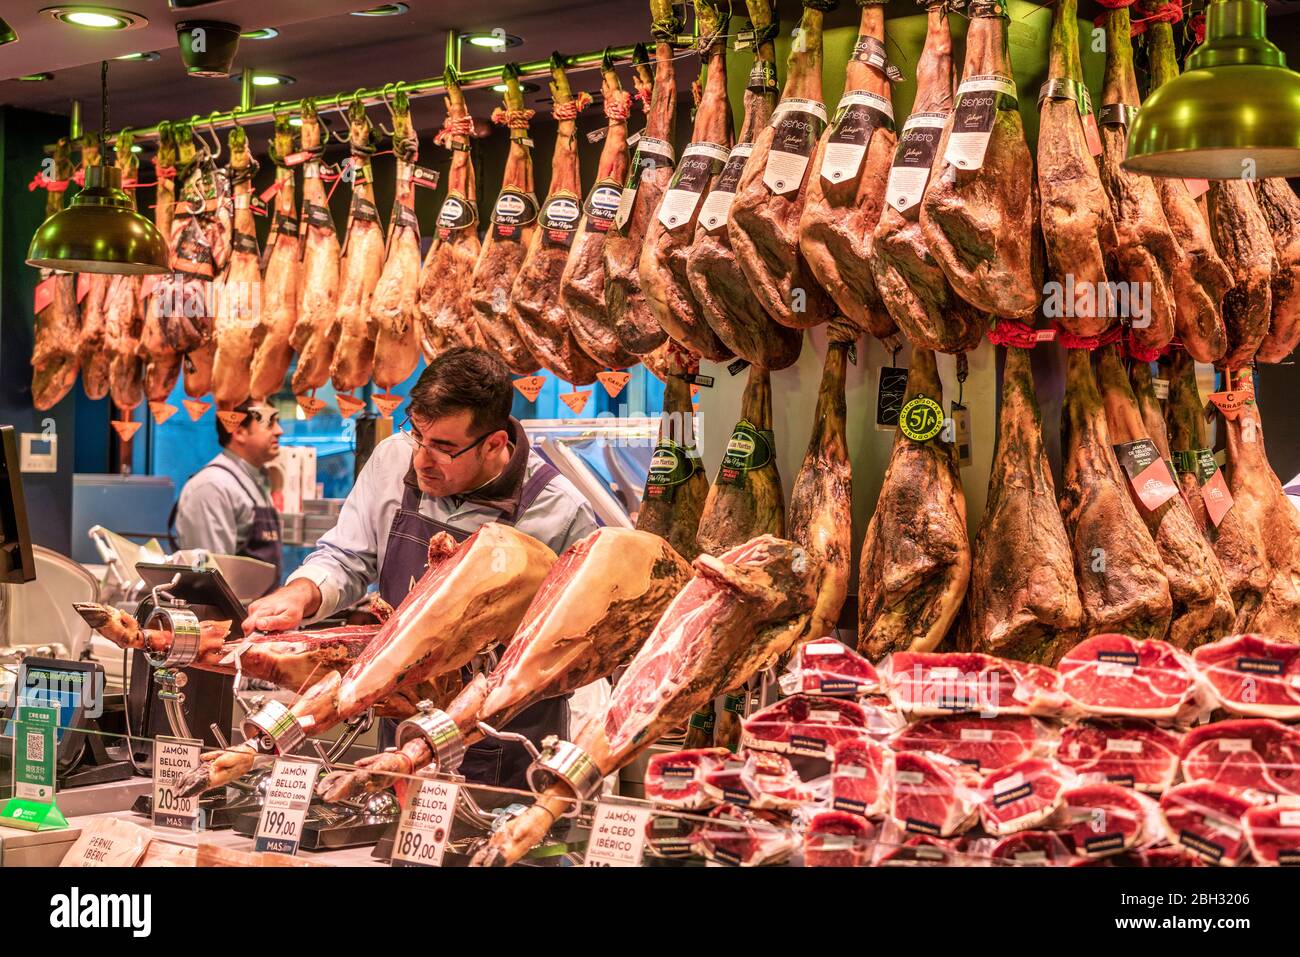 Mercat de la Boqueria, man Cutting Jamon Serrano, Hamam Stall, Markthalle, Barcelona, Spanien Stockfoto